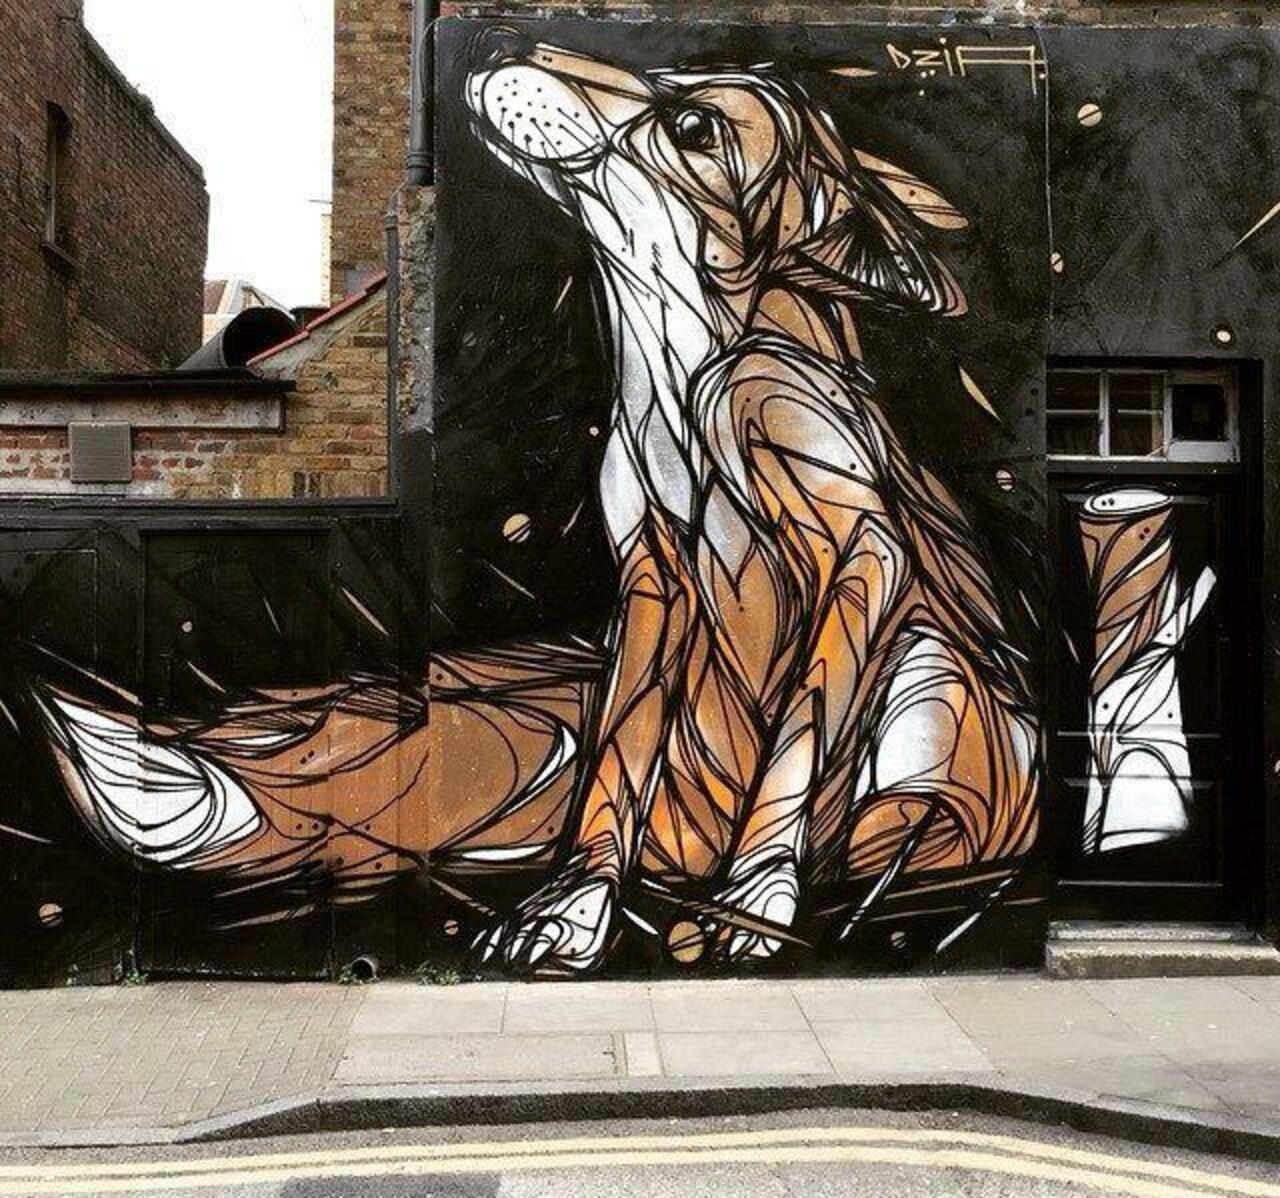 New Street Art by DZIA in London  

#art #arte #graffiti #streetart http://t.co/OMN8uUn9qS